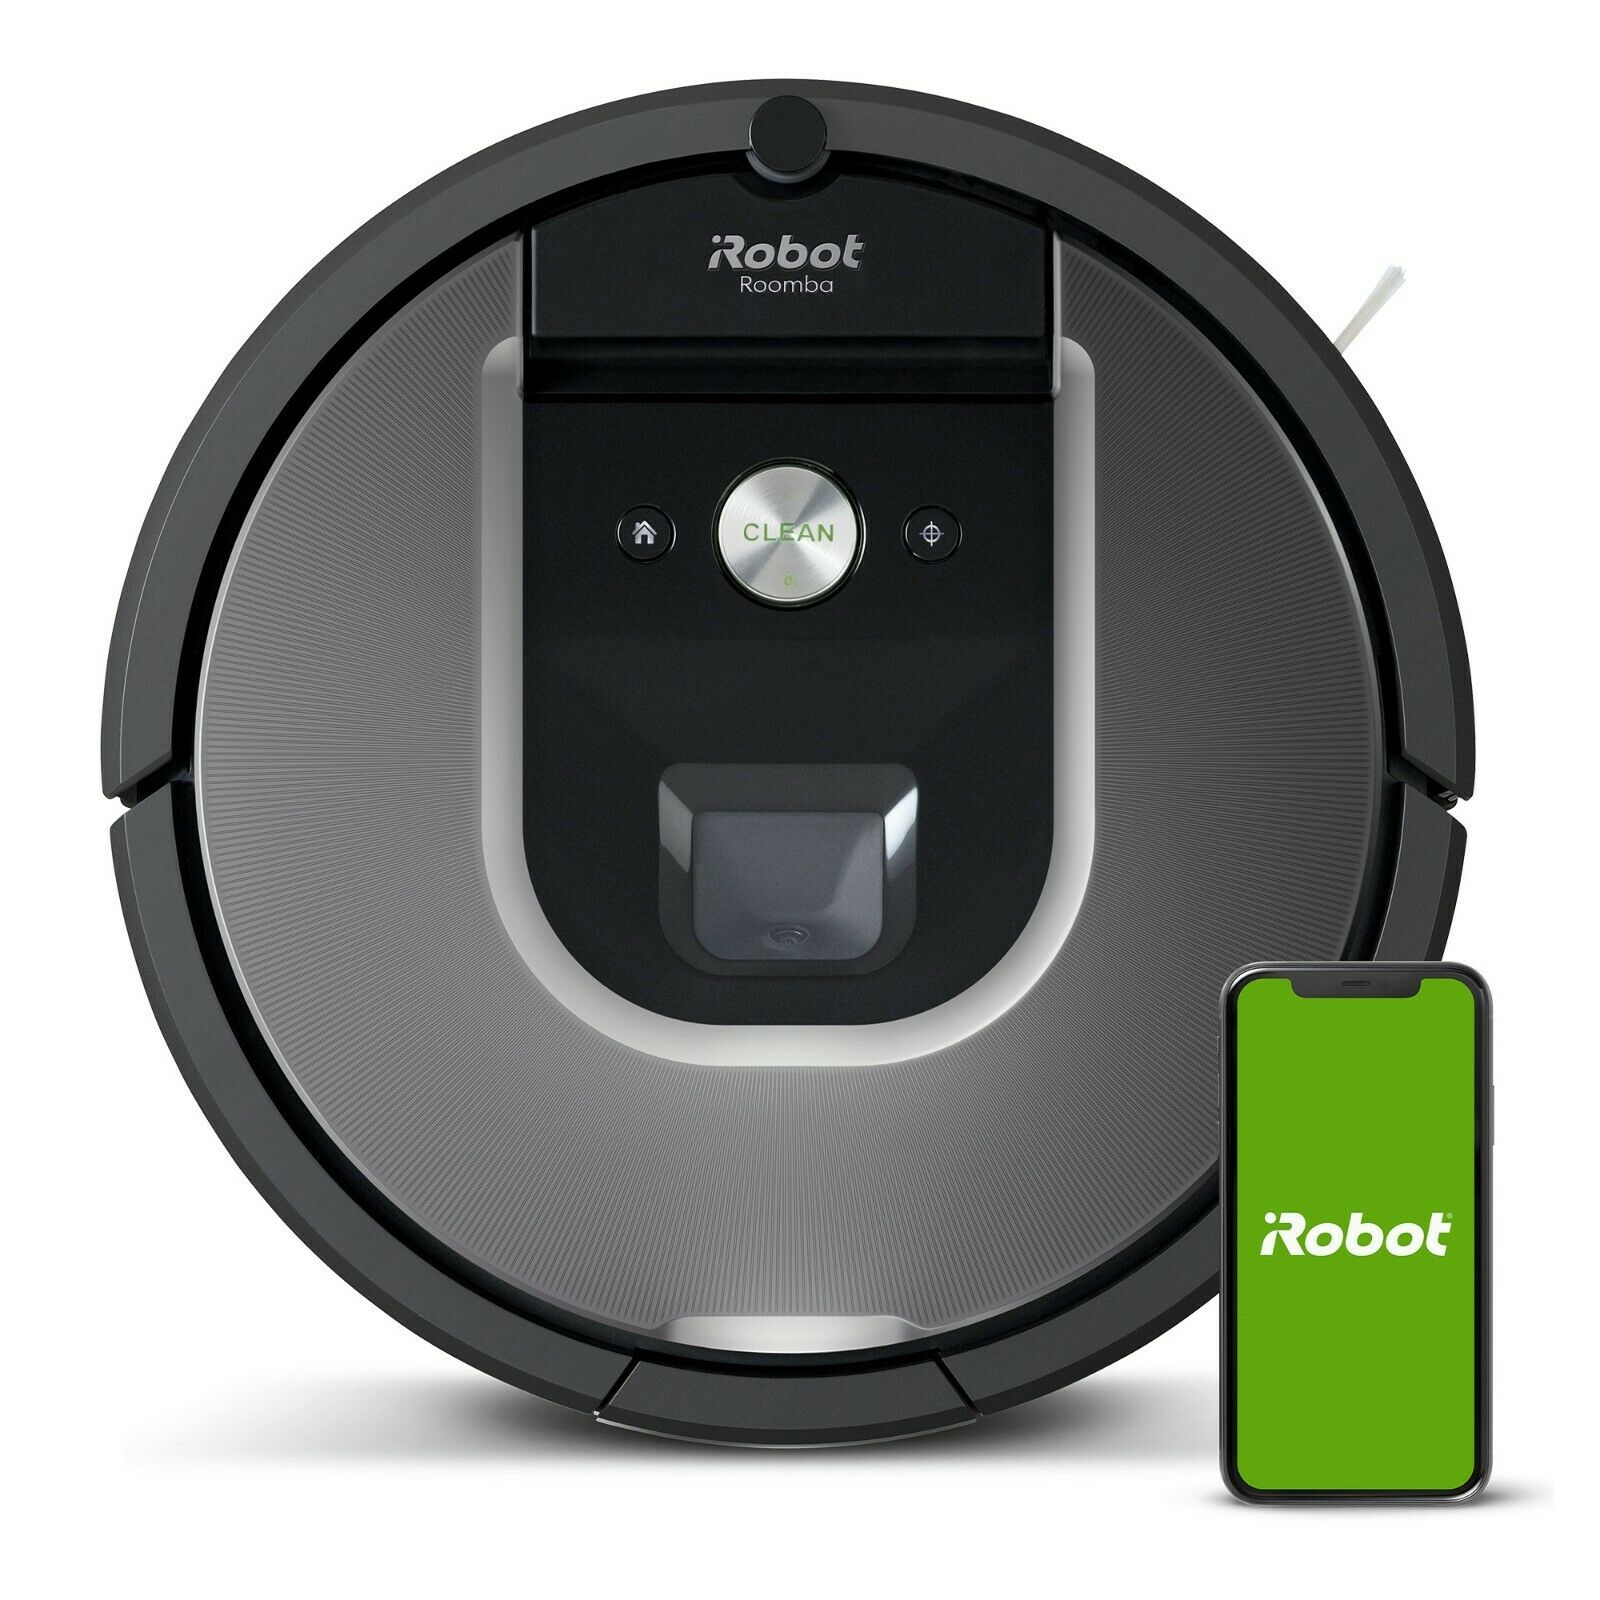 iRobot Roomba 960 WiFi Robot Vacuum (Manufacturer Certified Refurbished) w/ 2-Year Warranty $189.99 + Free Shipping via iRobot/eBay